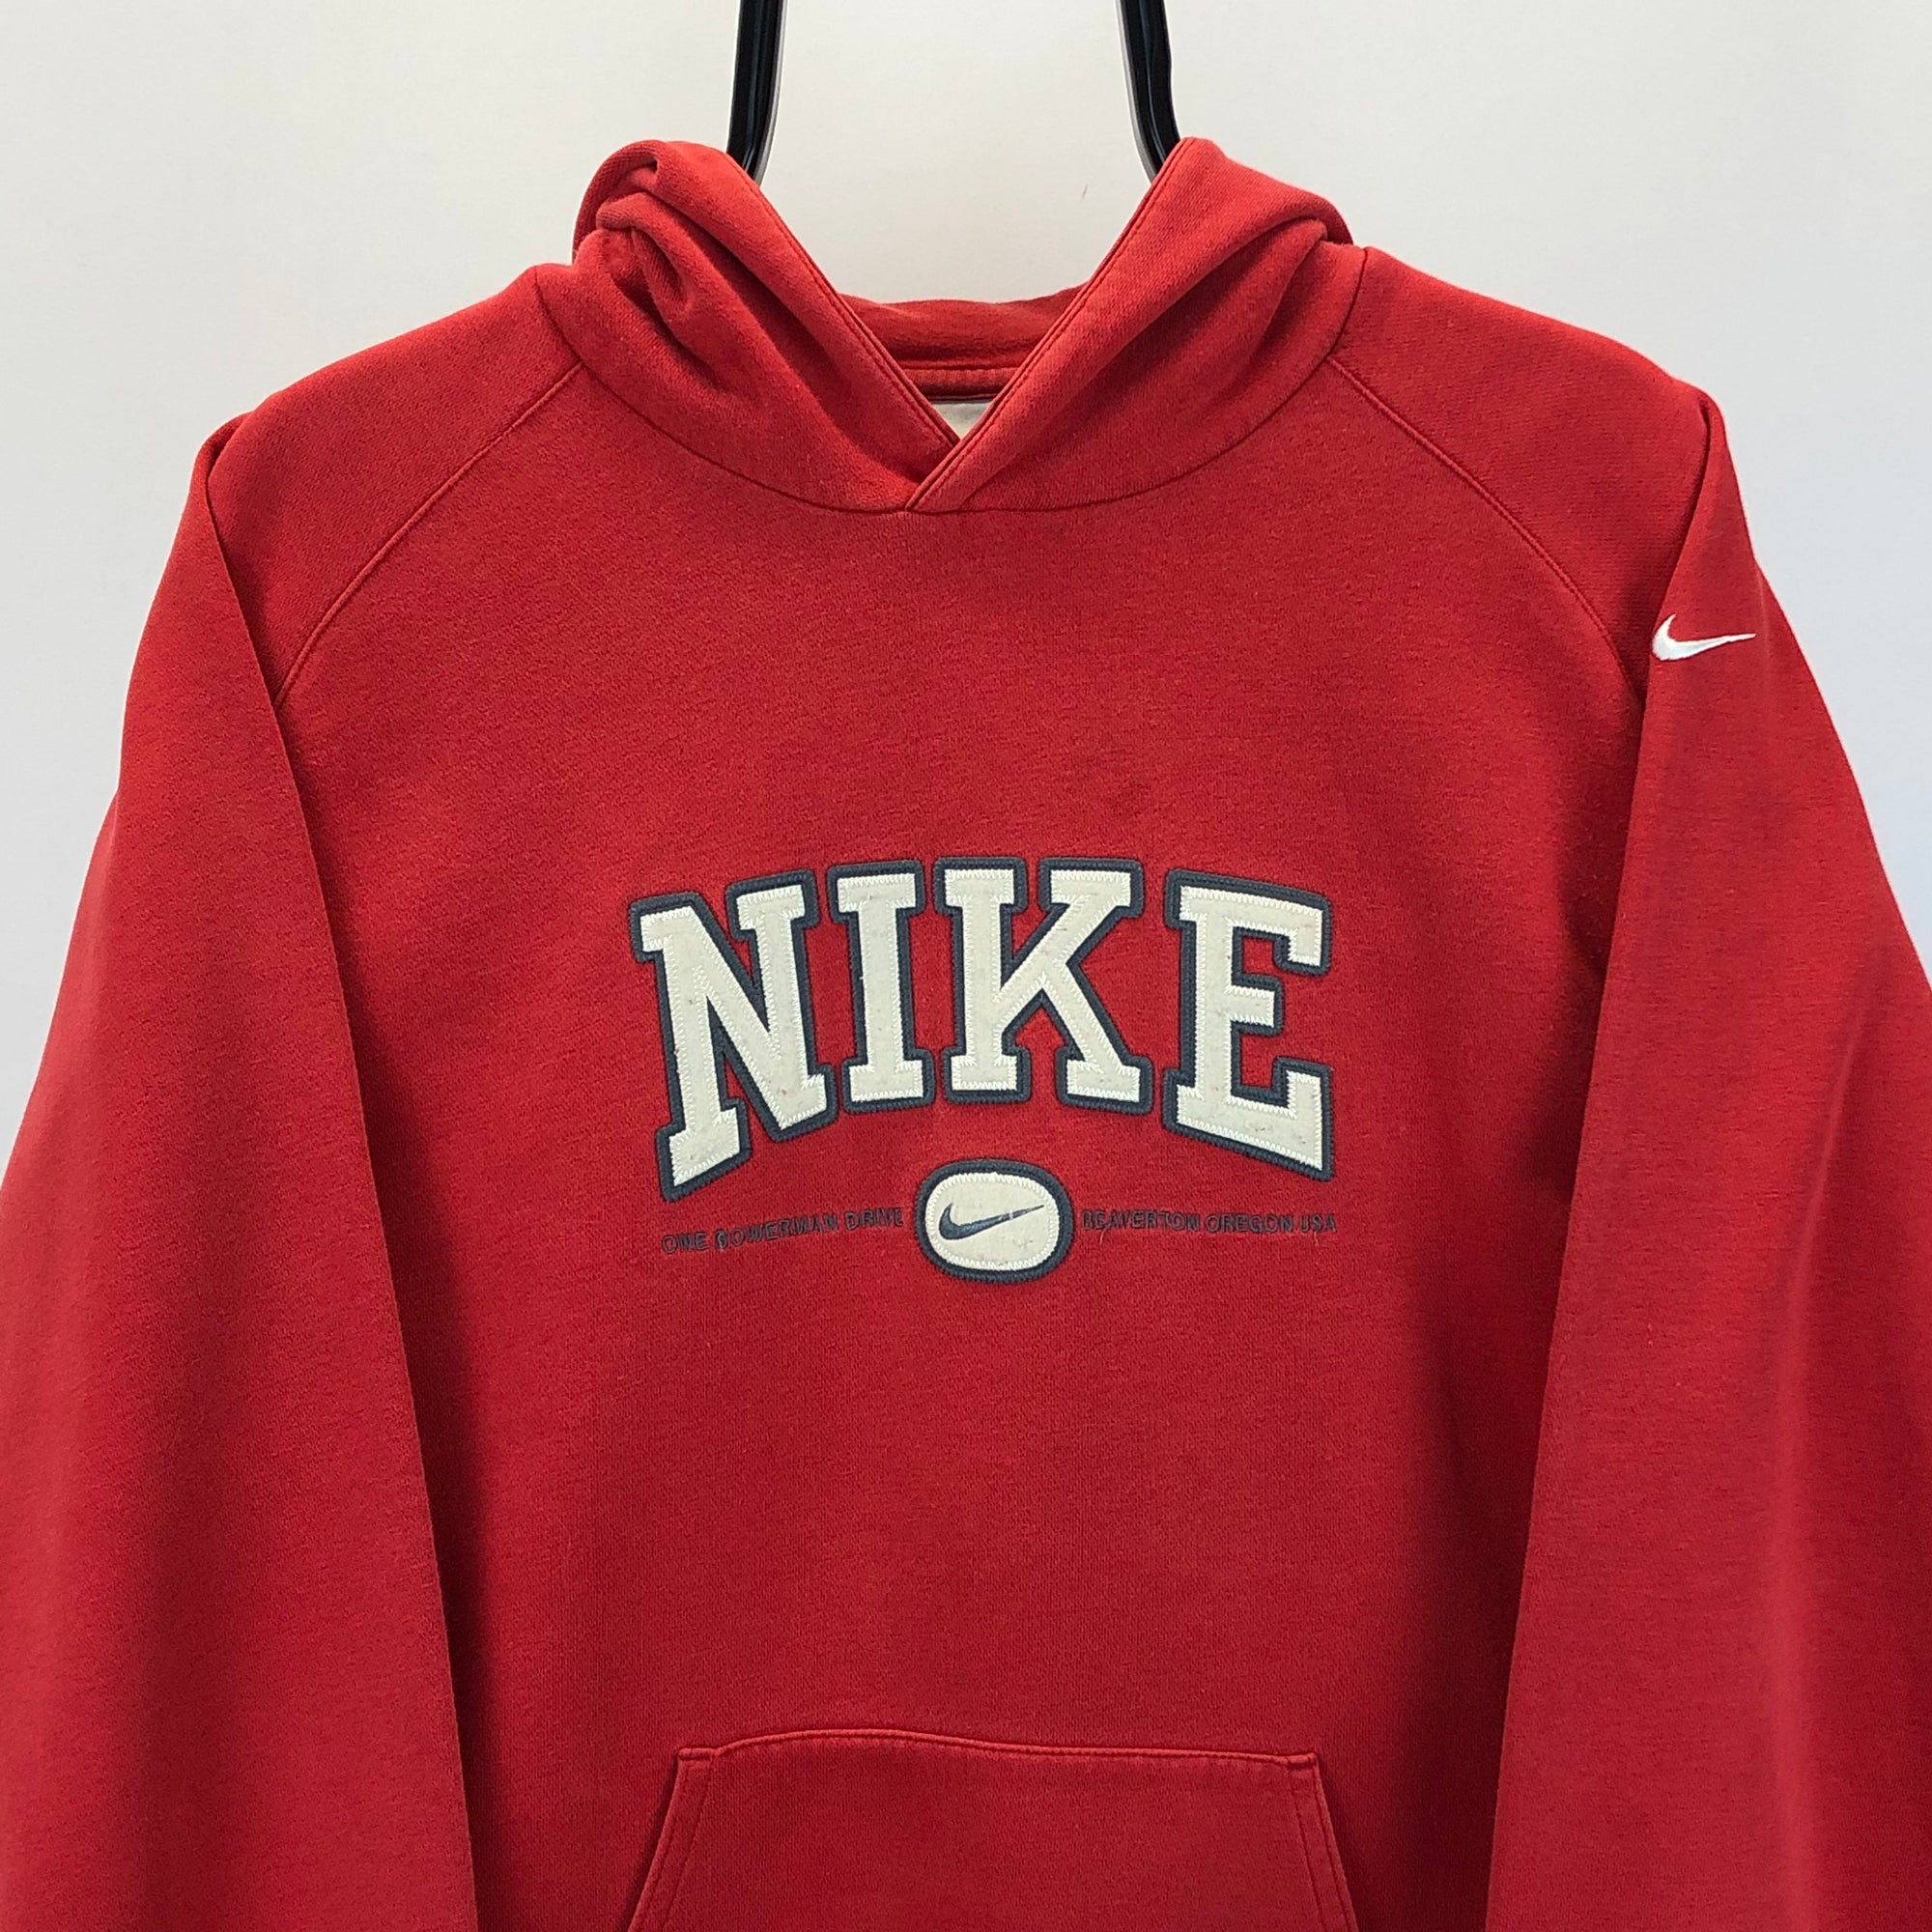 Vintage Nike Spellout Hoodie in Red - Men's Small/Women's Medium